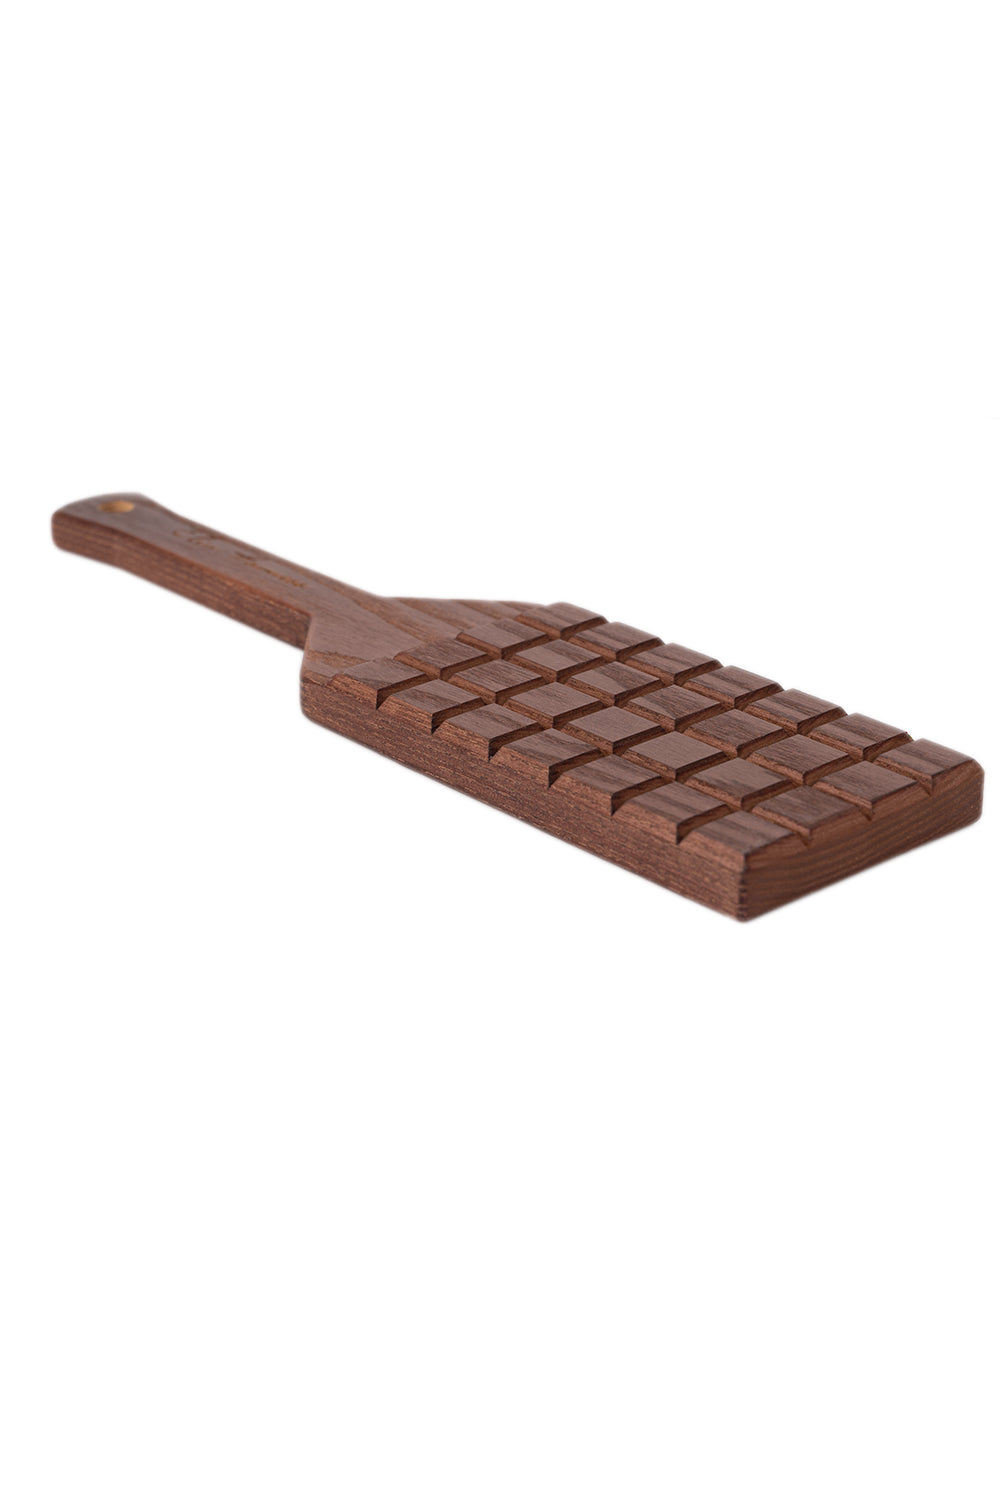 BDSM Wooden Spanking Paddle - Chocolate